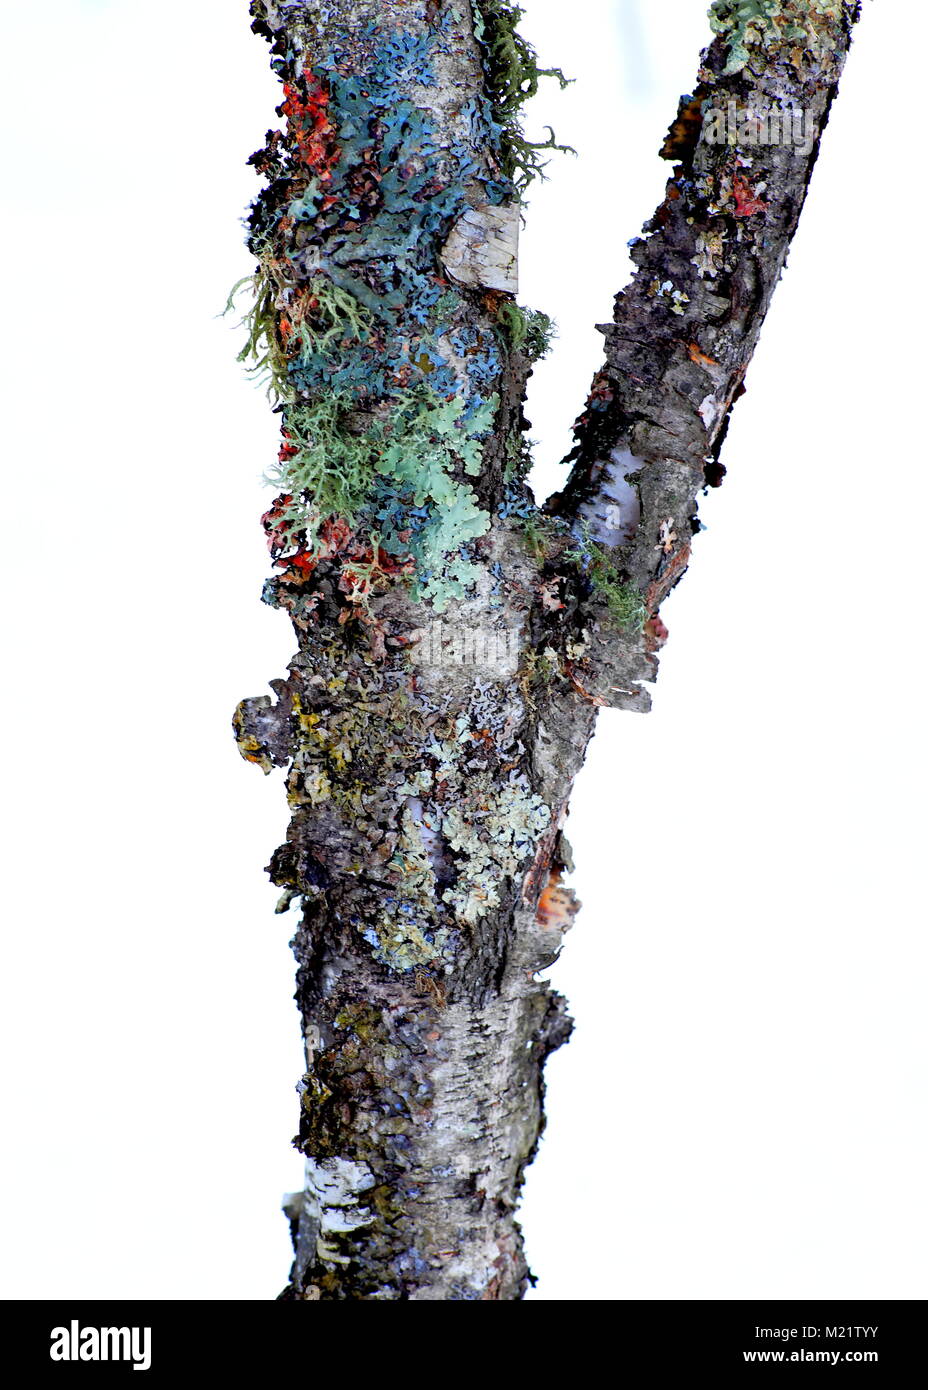 Lichen on a tree Stock Photo